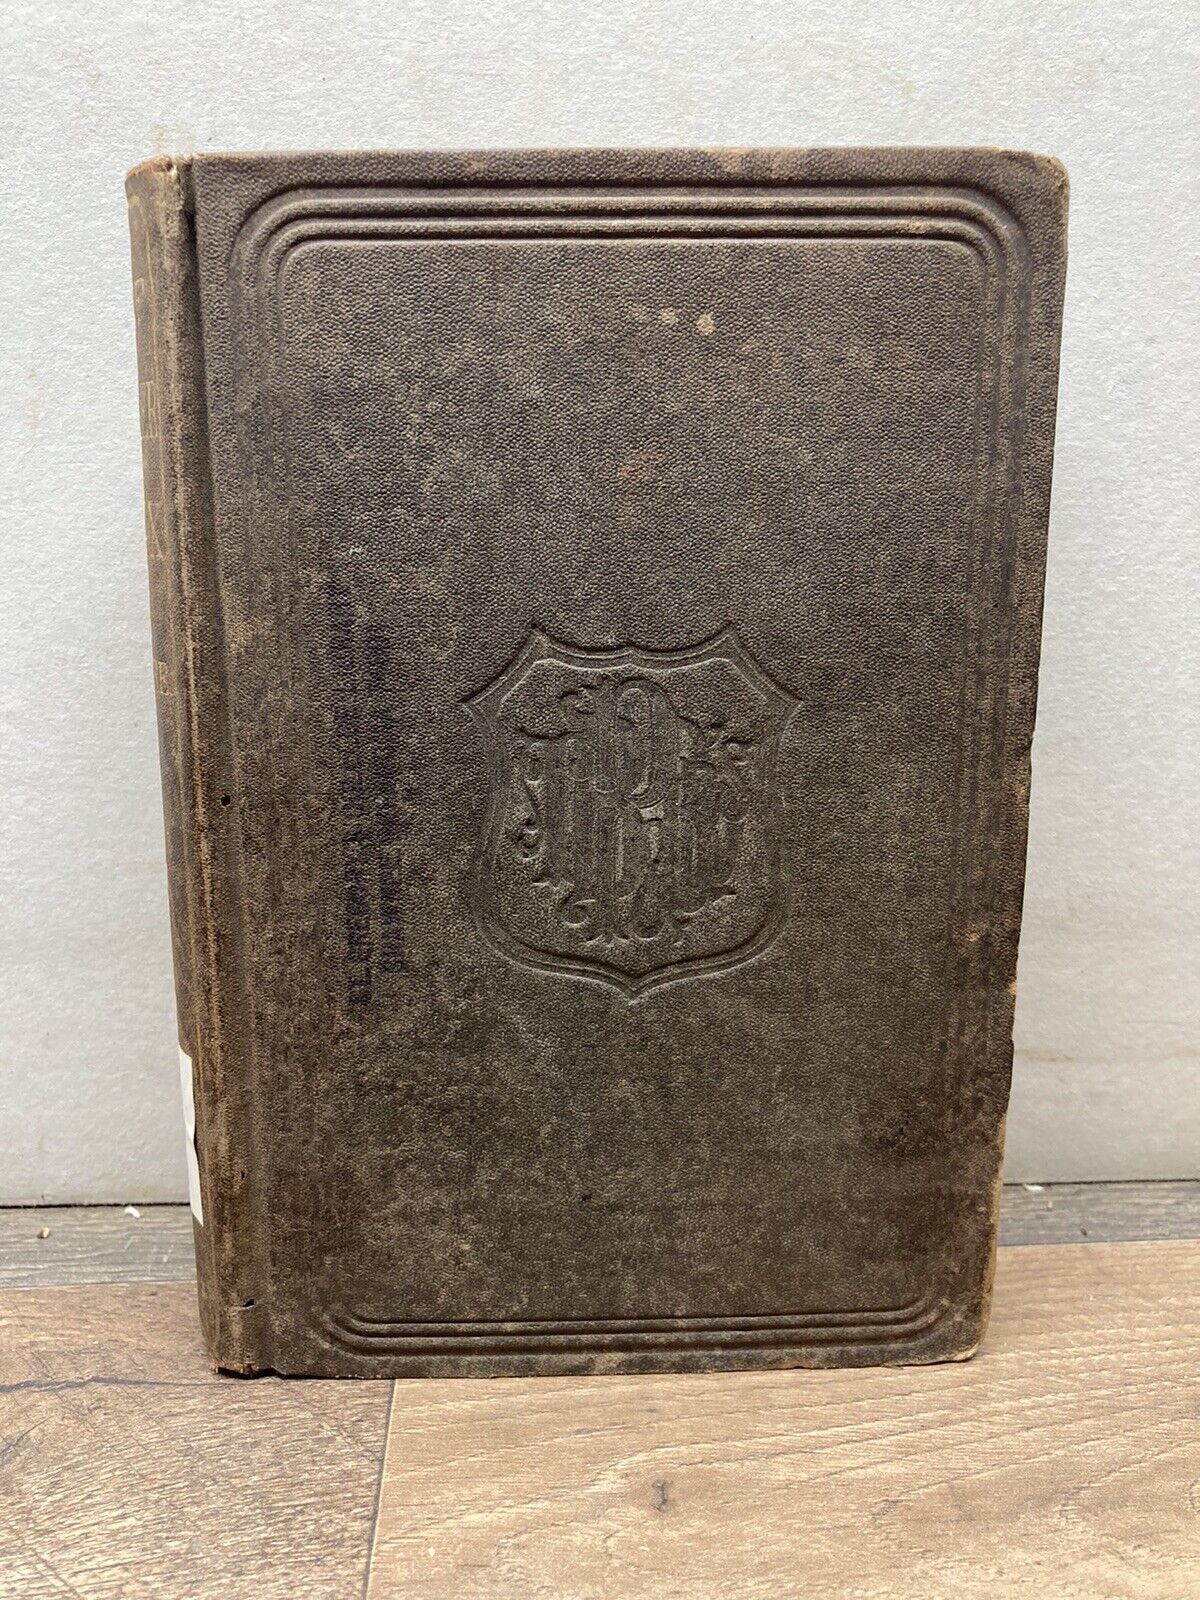 Schuyler Colfax  U.S. Vice President Biography 1868 Moore book